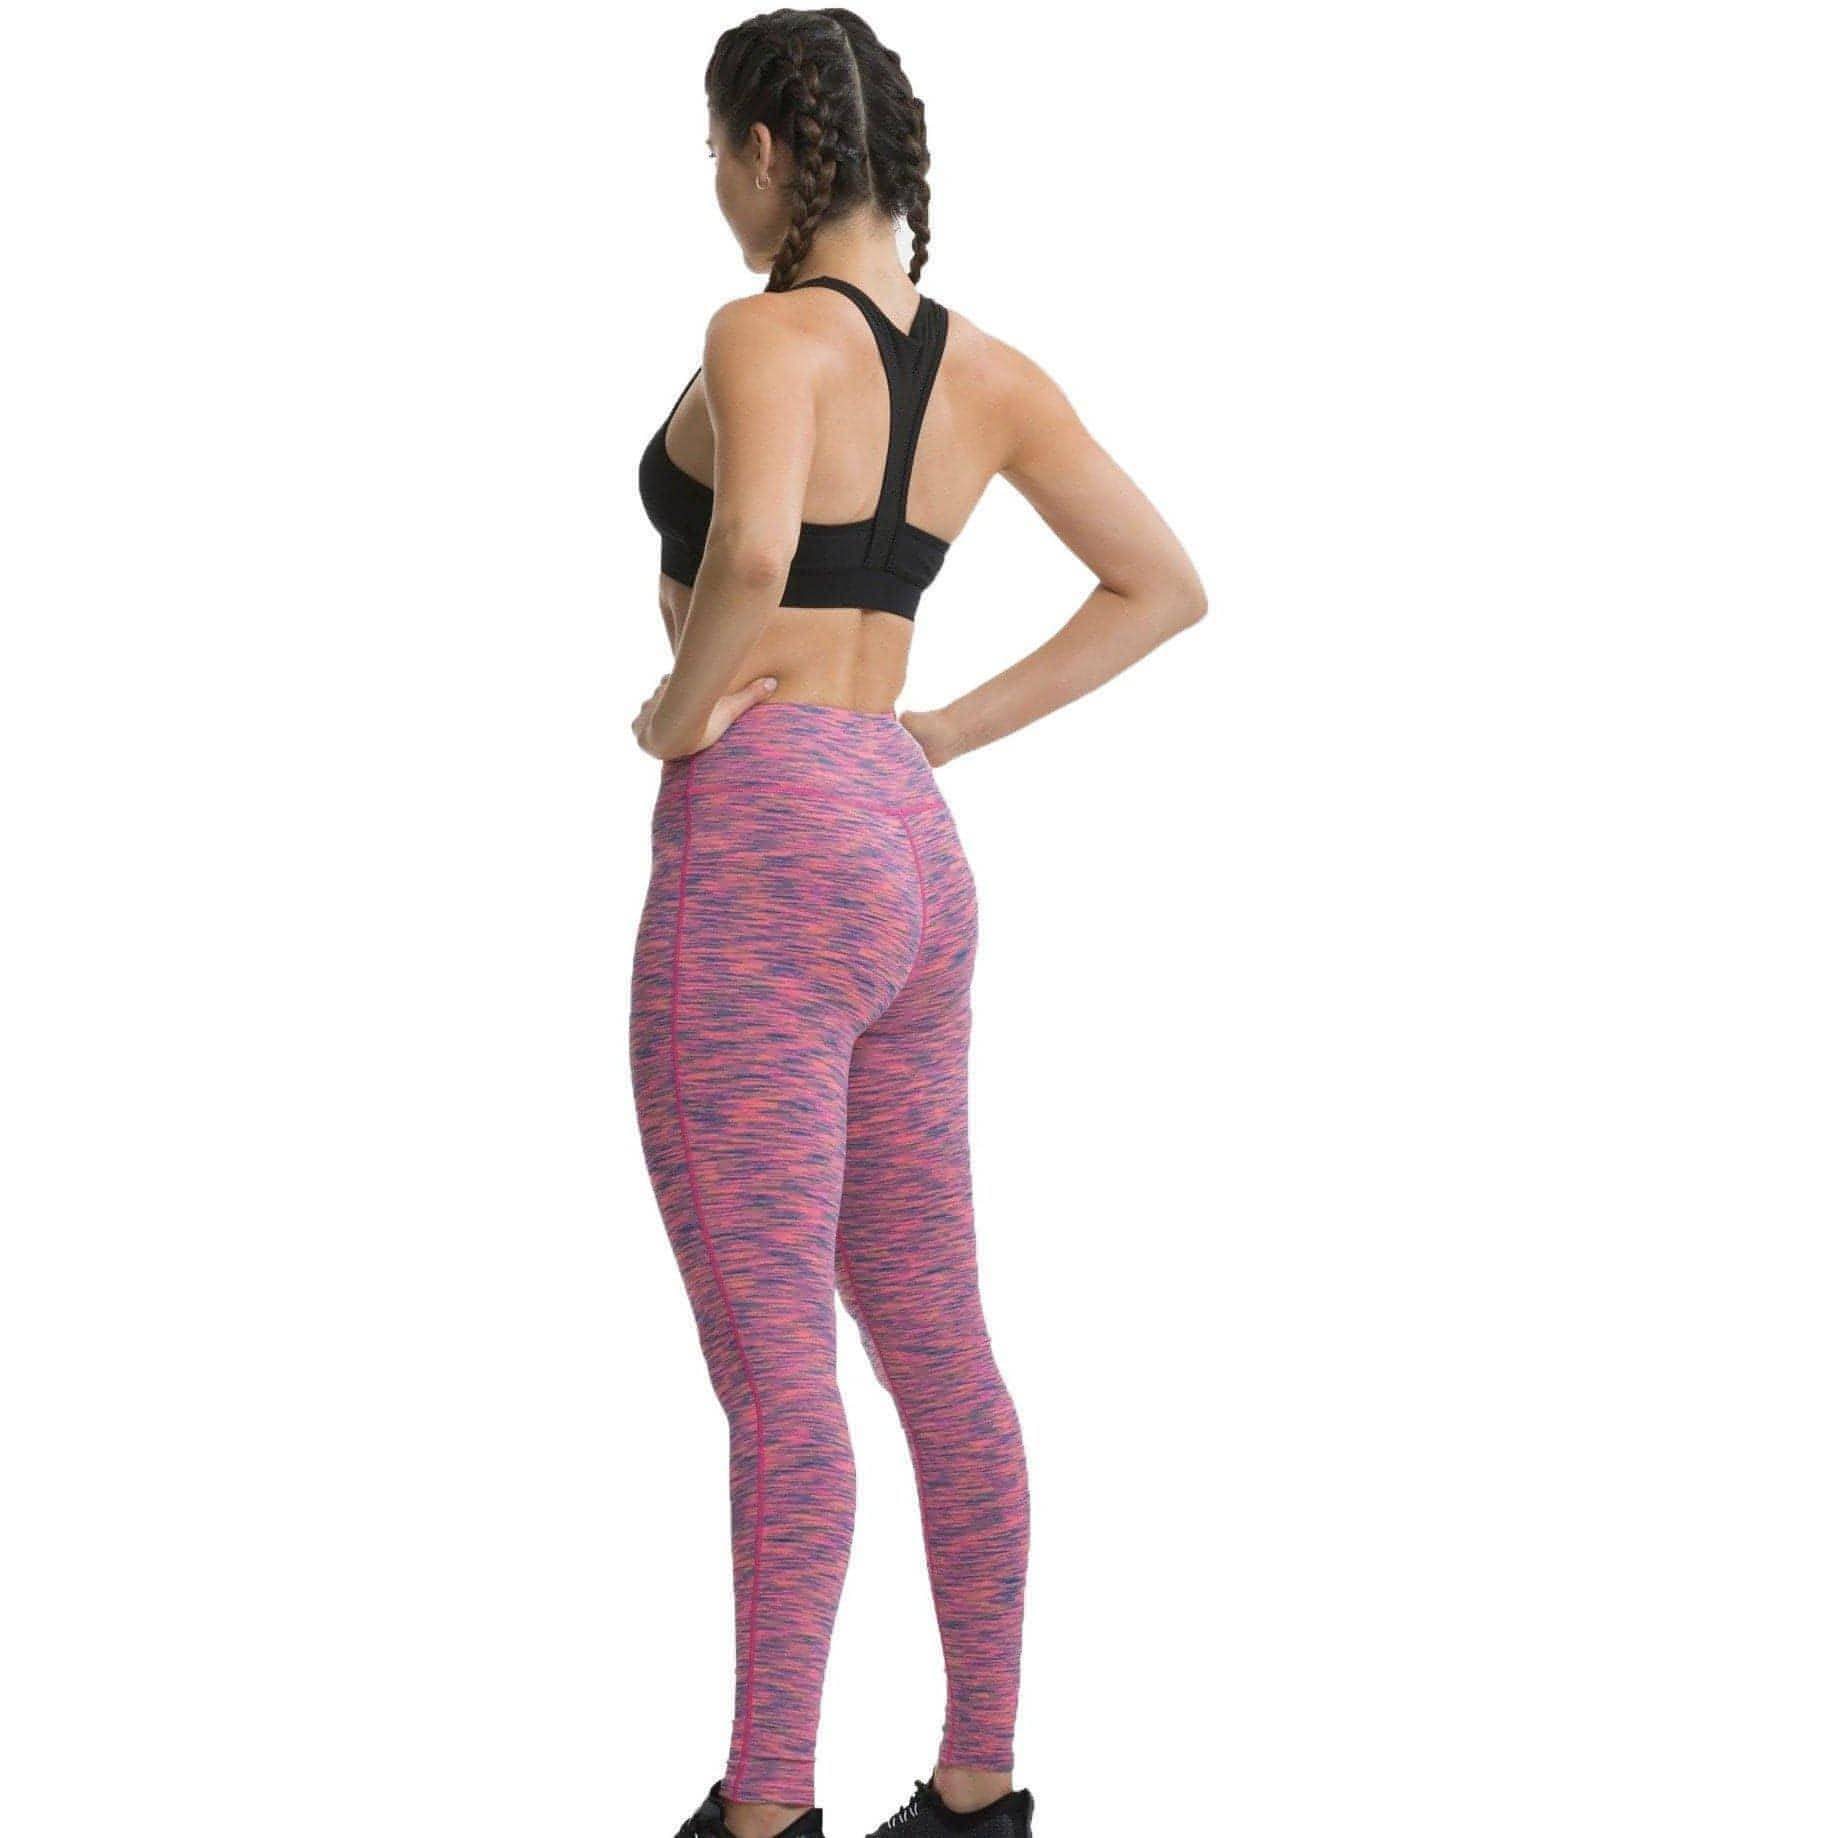 TCA SpaceKnit Premium Womens Long Training Tights - Pink - Start Fitness